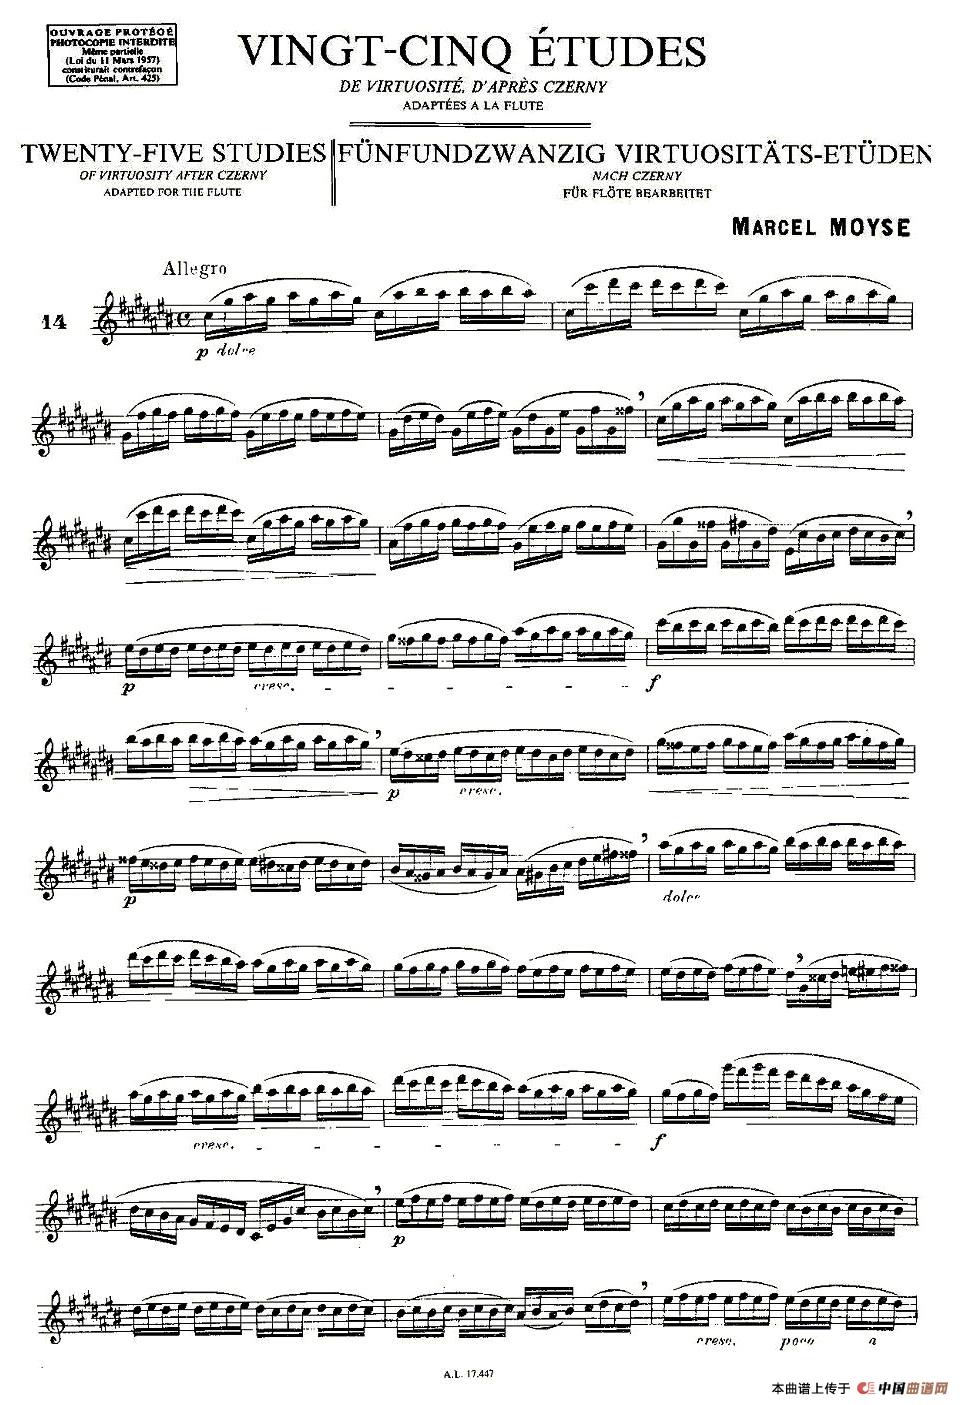 Moyse - 25 Studies after Czerny flute 之14（25首改编自车